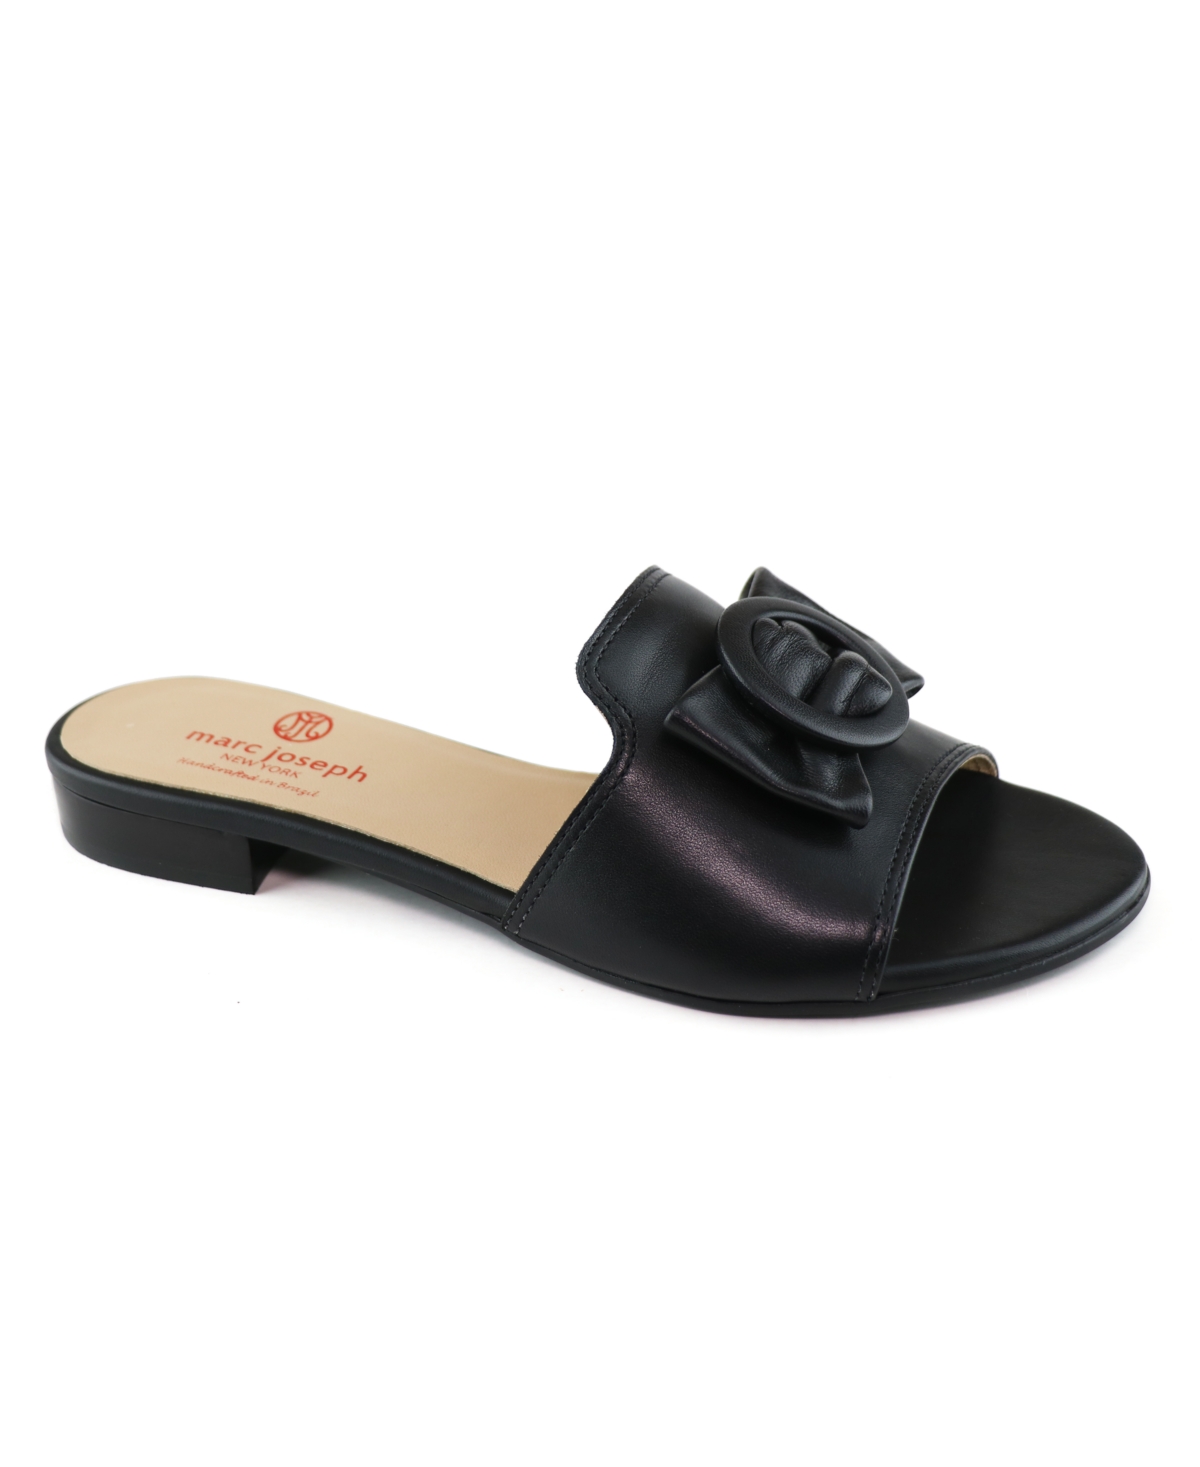 Walcott Ave Leather Flat Sandals - Black